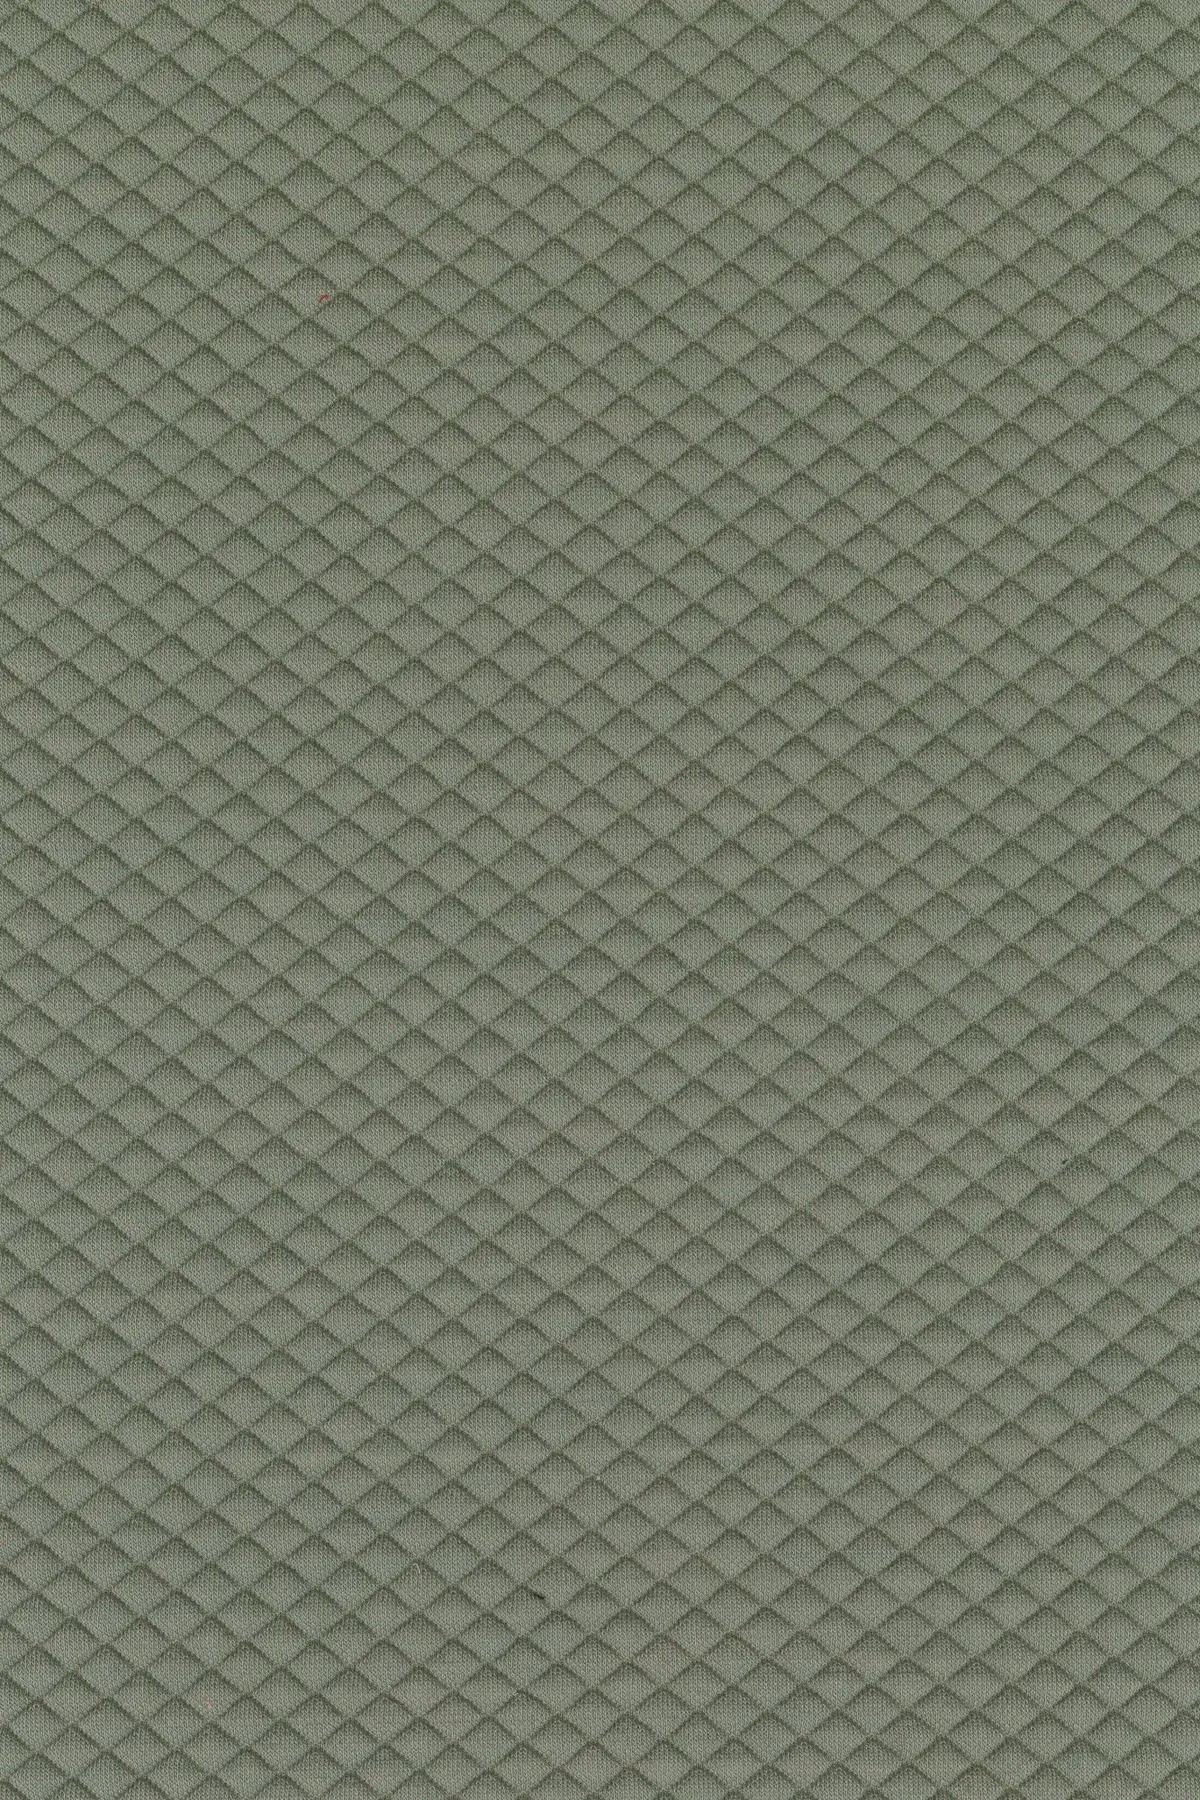 Fabric sample Mosaic 2 0922 green